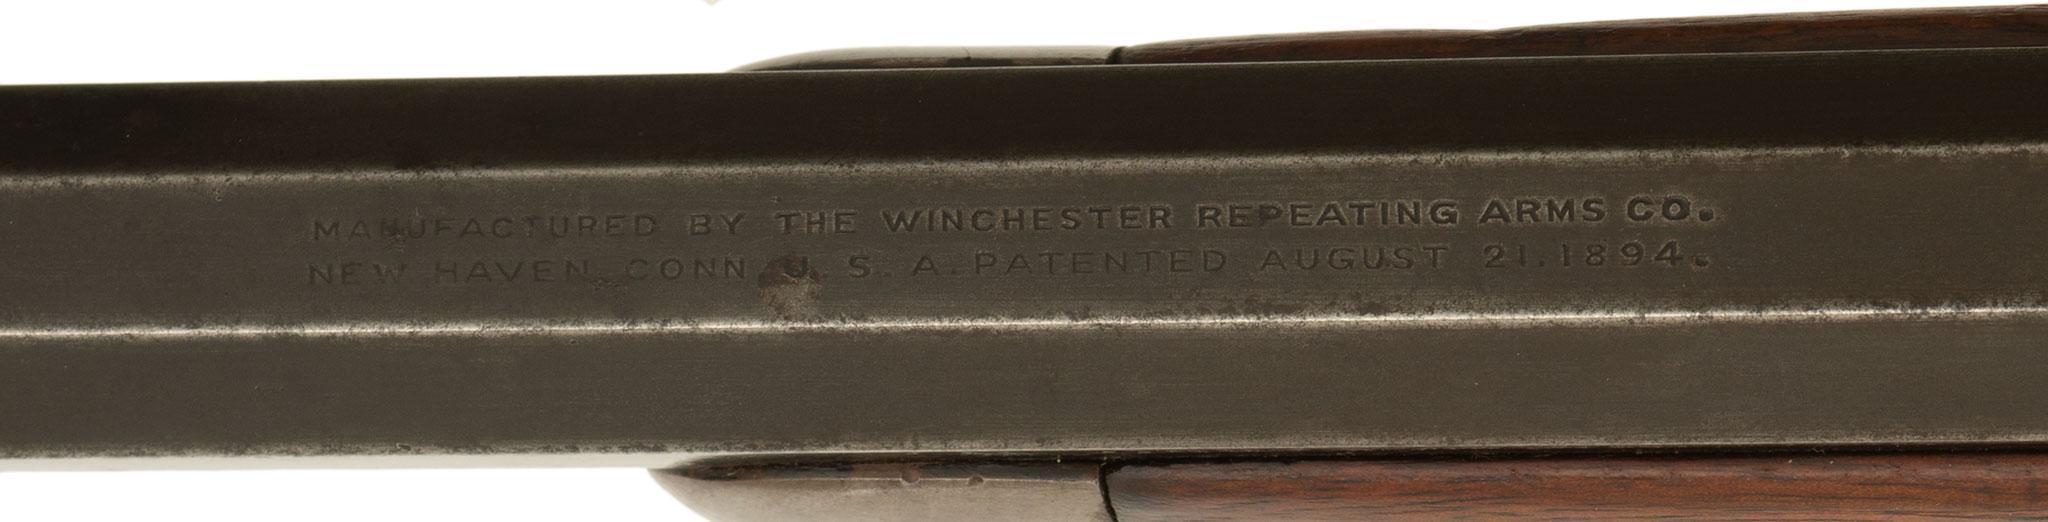 **Winchester Model 1894 Rifle